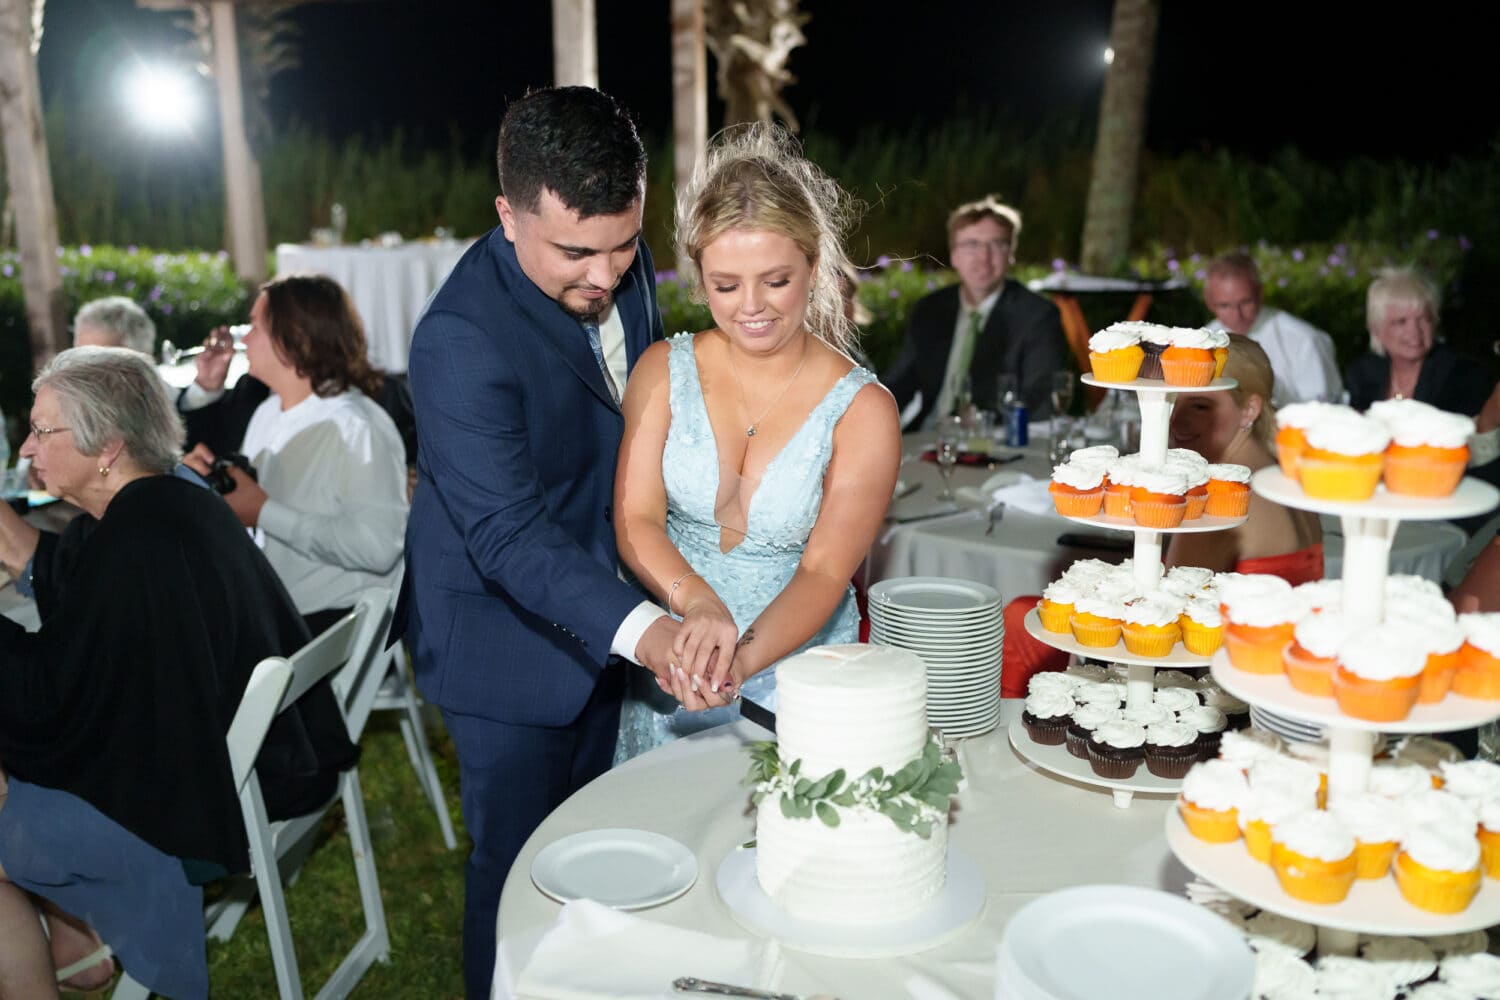 Cake cutting - Hilton Myrtle Beach Resort